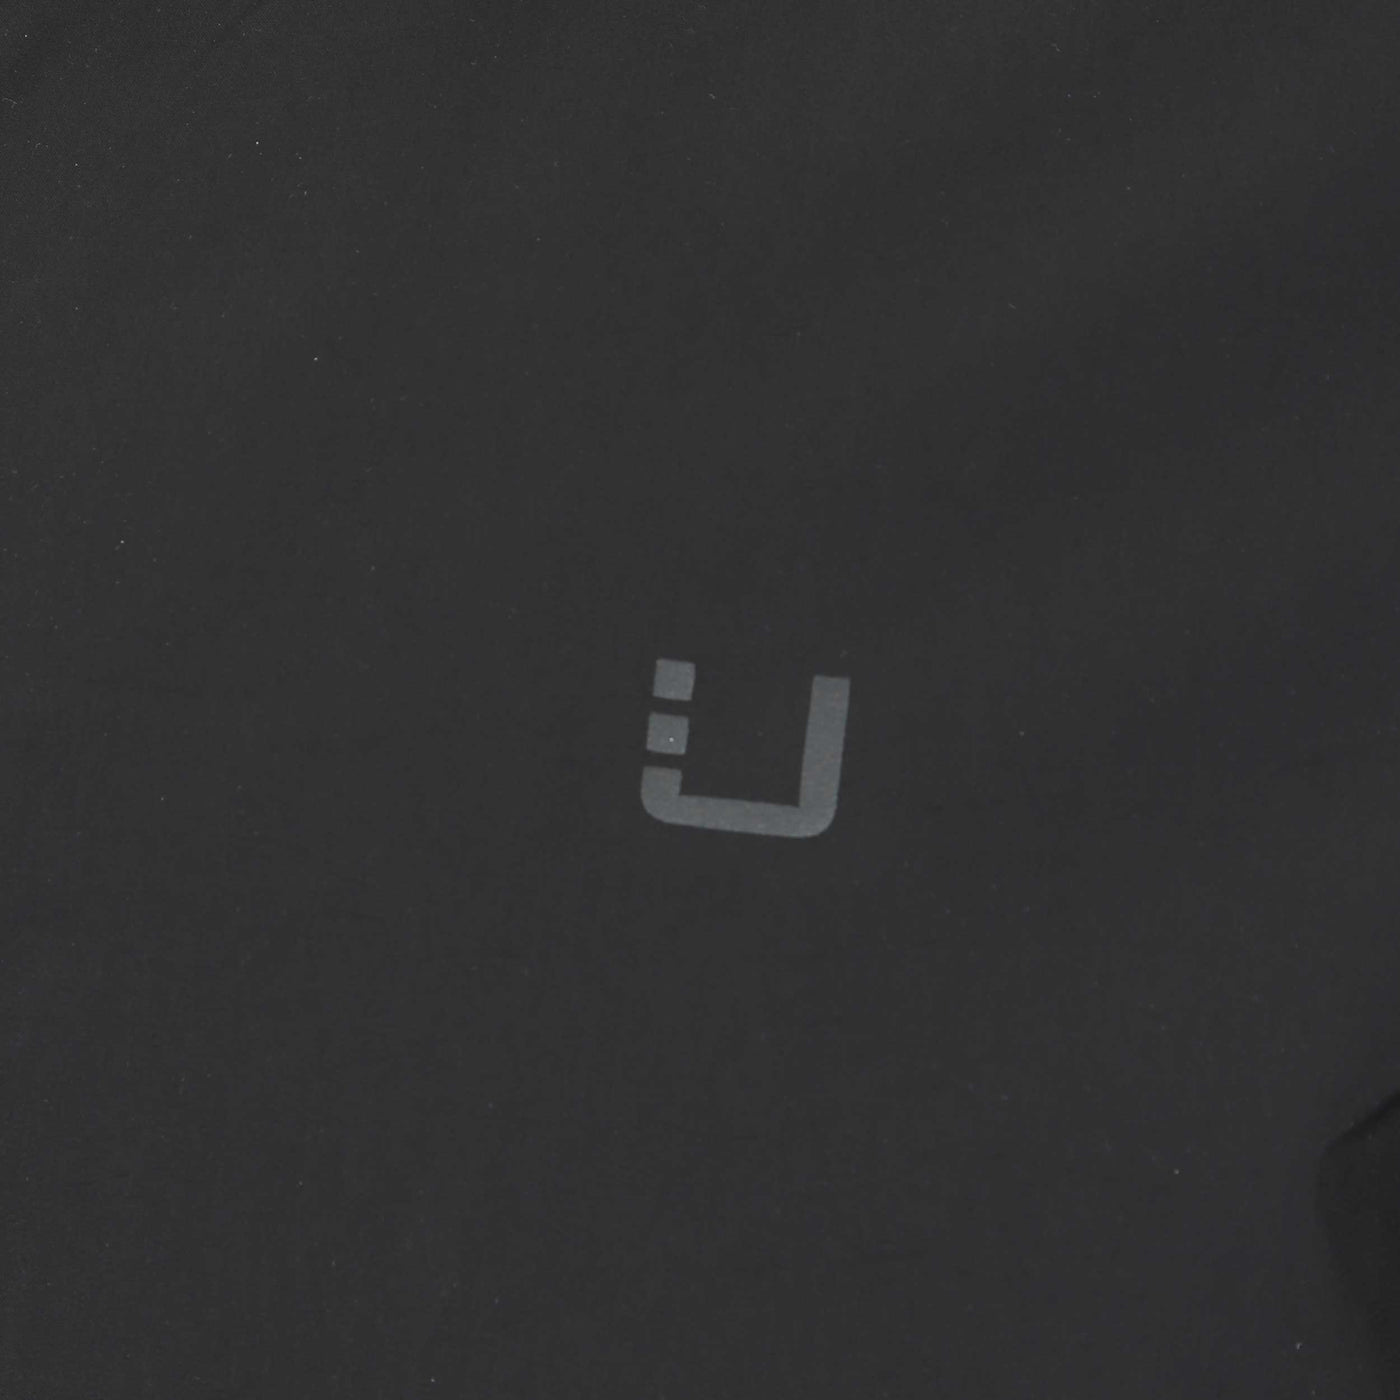 UBR Regulator Coat in Metorite Brown Logo